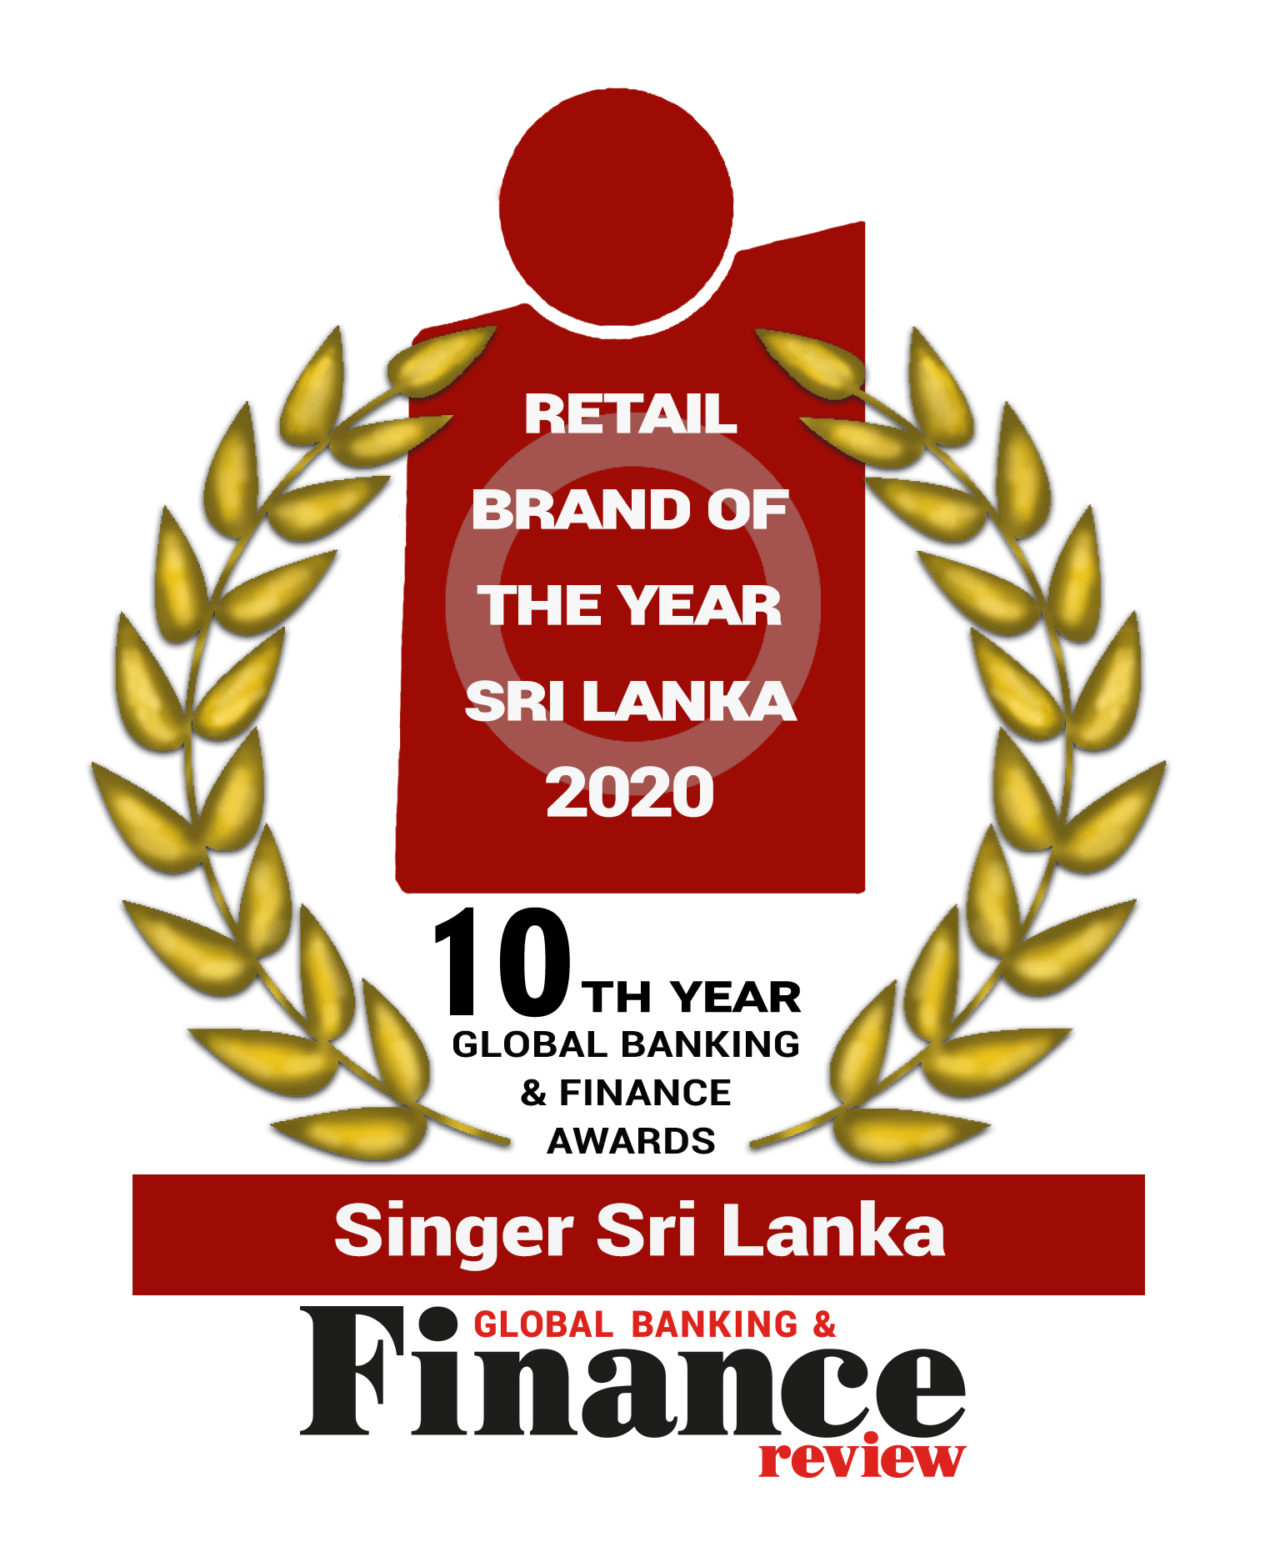 Retail-Brand-of-the-Year-Sri-Lanka-2020_Red-1-1280x1557.jpg